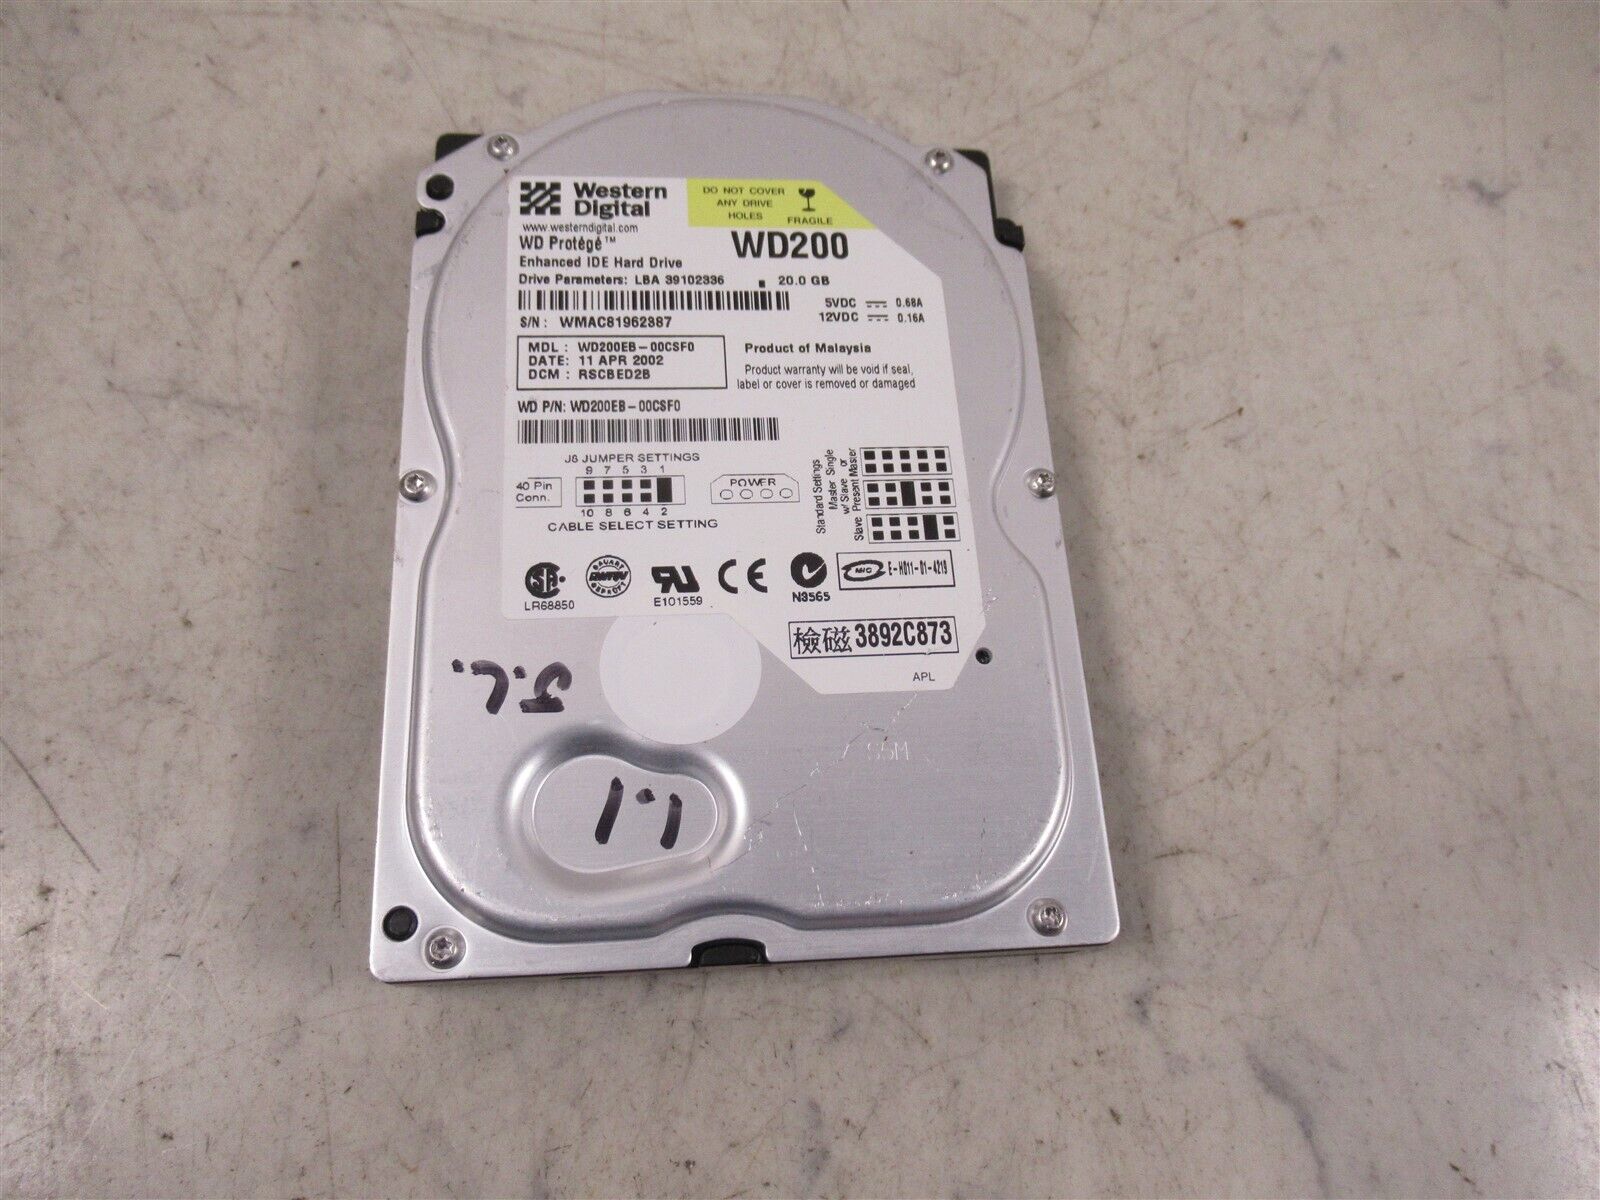 Western Digital WD Protege Enhanced IDE Hard Drive WD200 20GB WD200EB-00CSF0